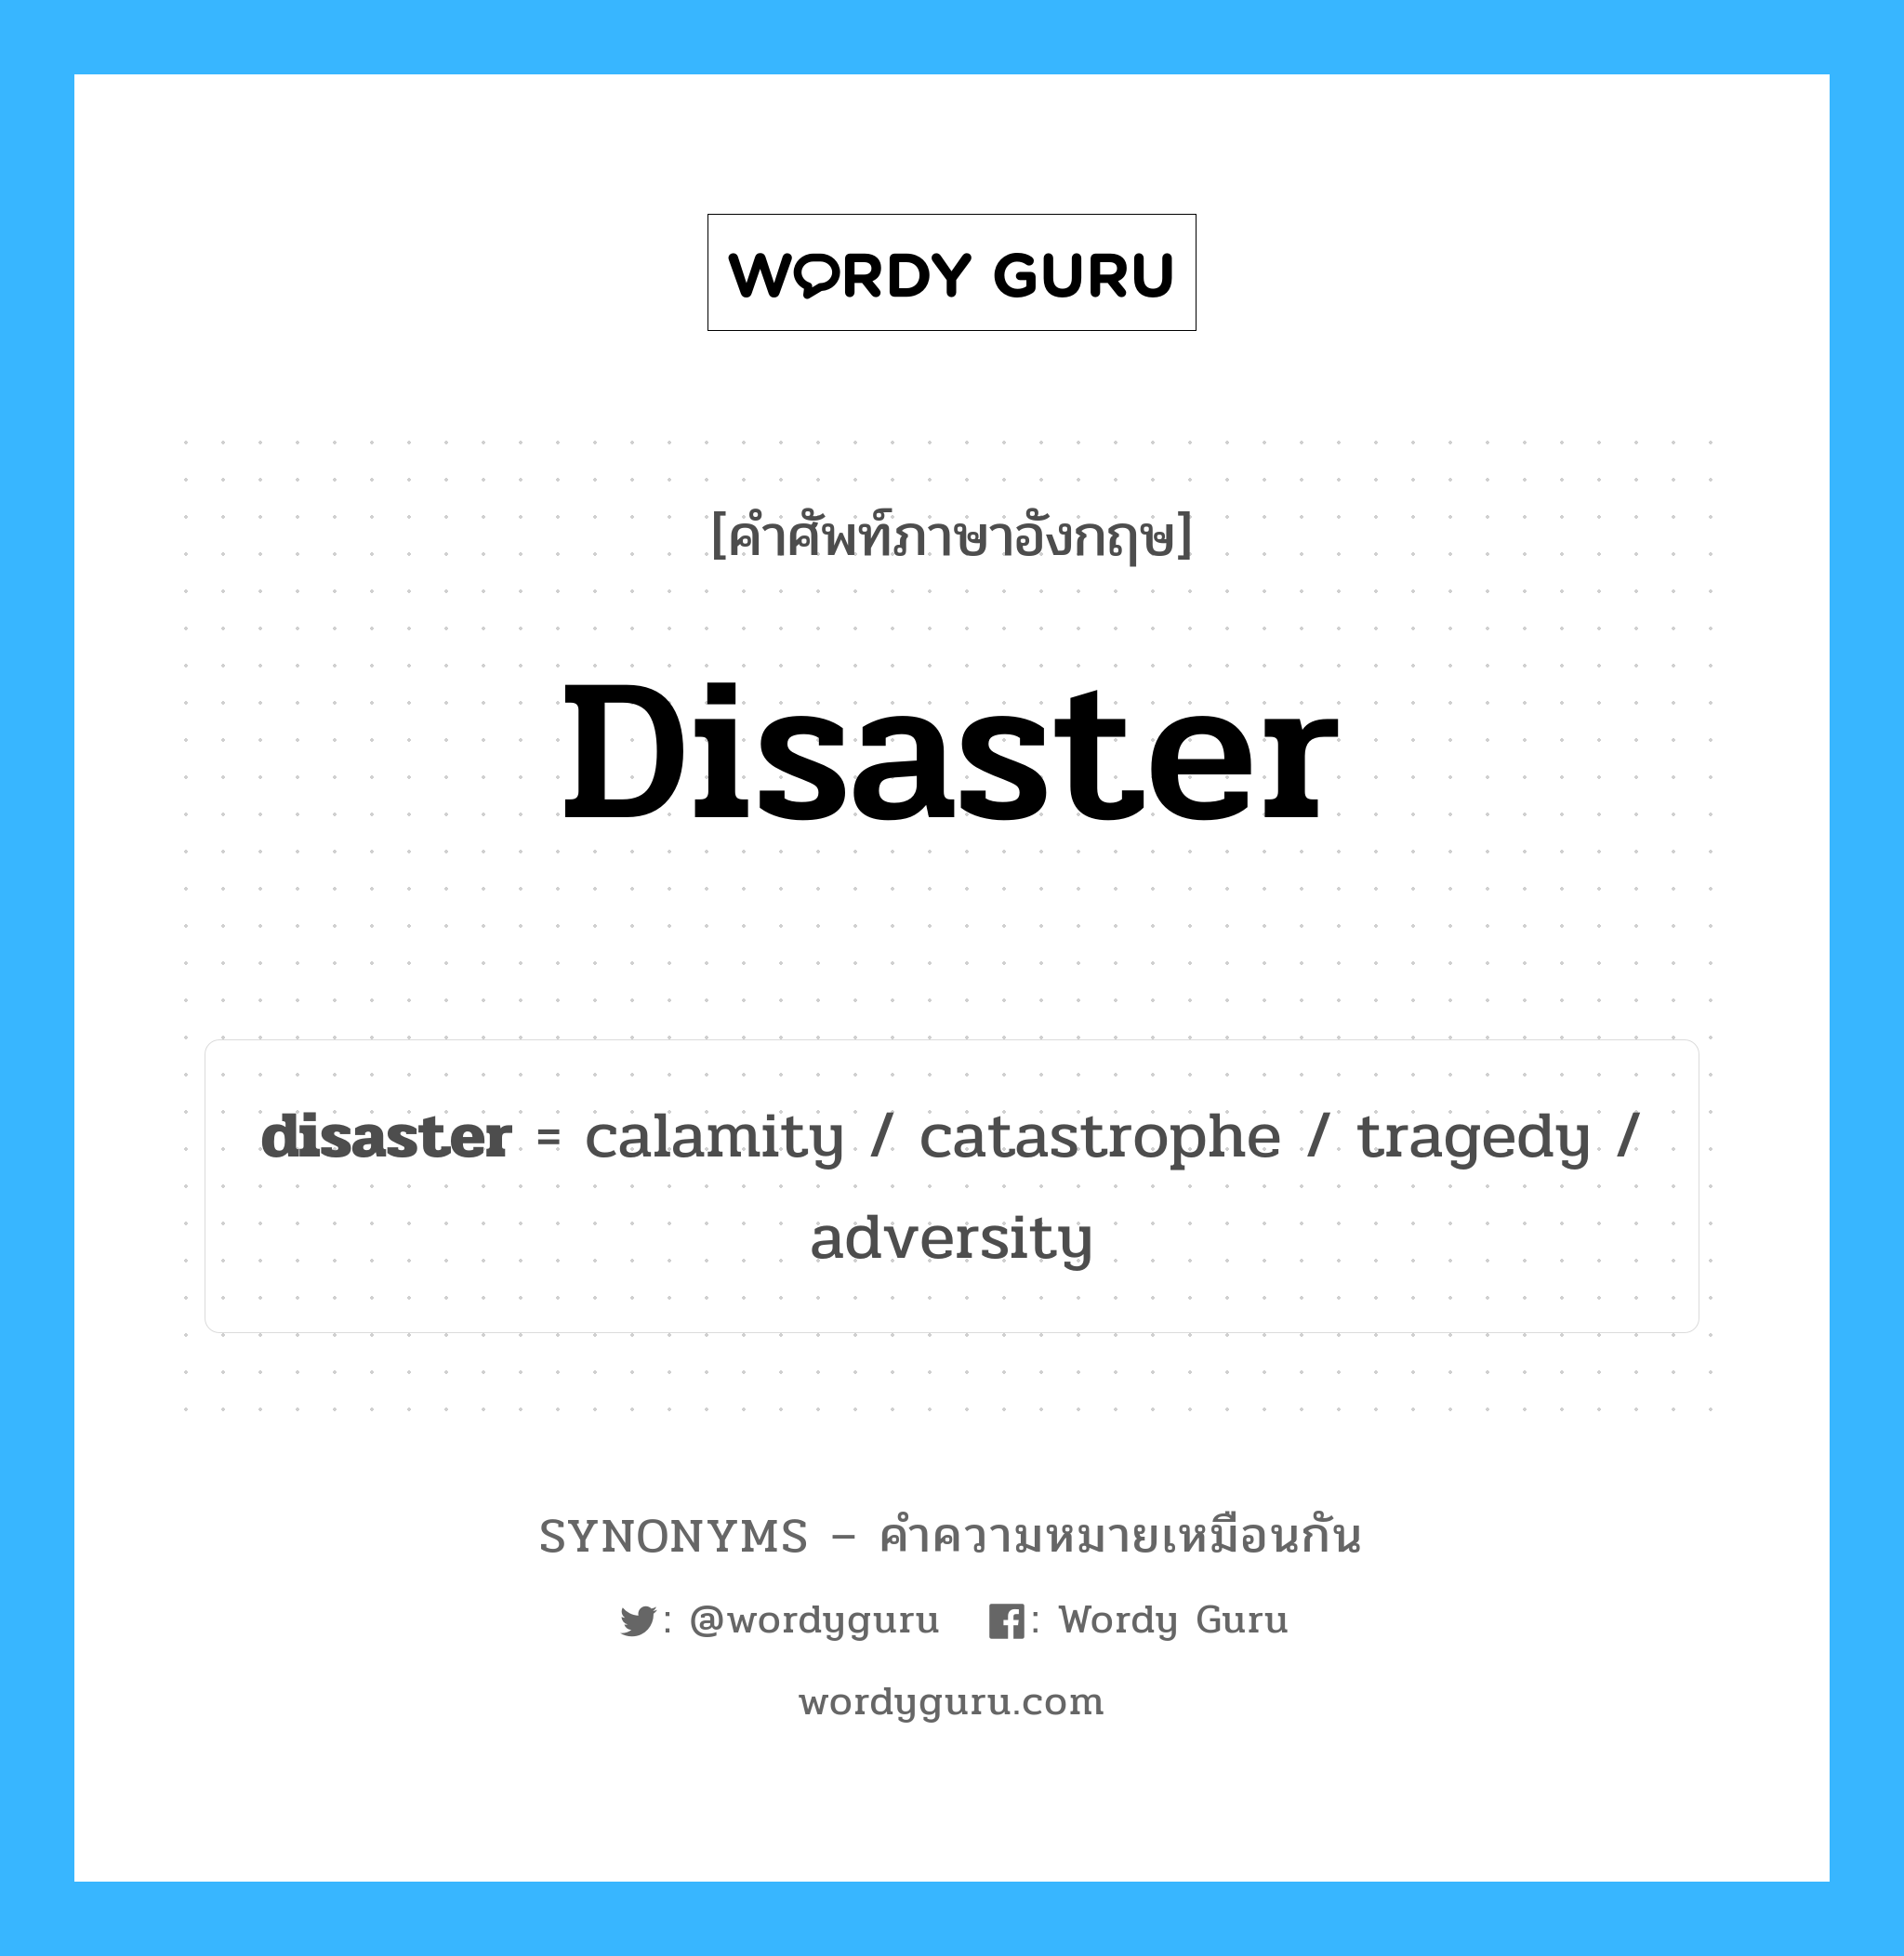 catastrophe เป็นหนึ่งใน disaster และมีคำอื่น ๆ อีกดังนี้, คำศัพท์ภาษาอังกฤษ catastrophe ความหมายคล้ายกันกับ disaster แปลว่า แผ่นดินไหว หมวด disaster